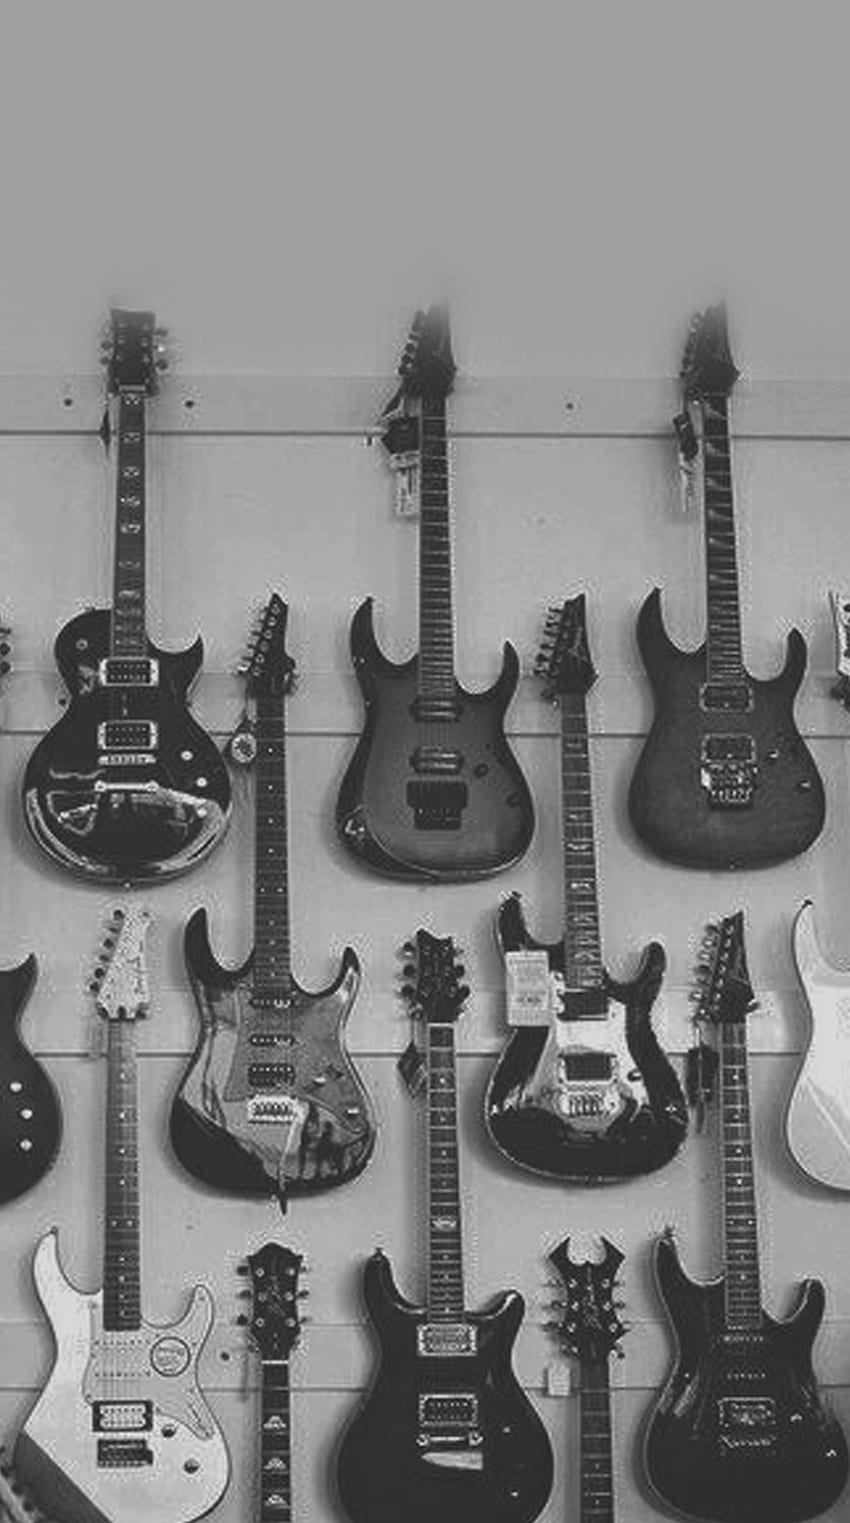 A wall of guitars - Guitar